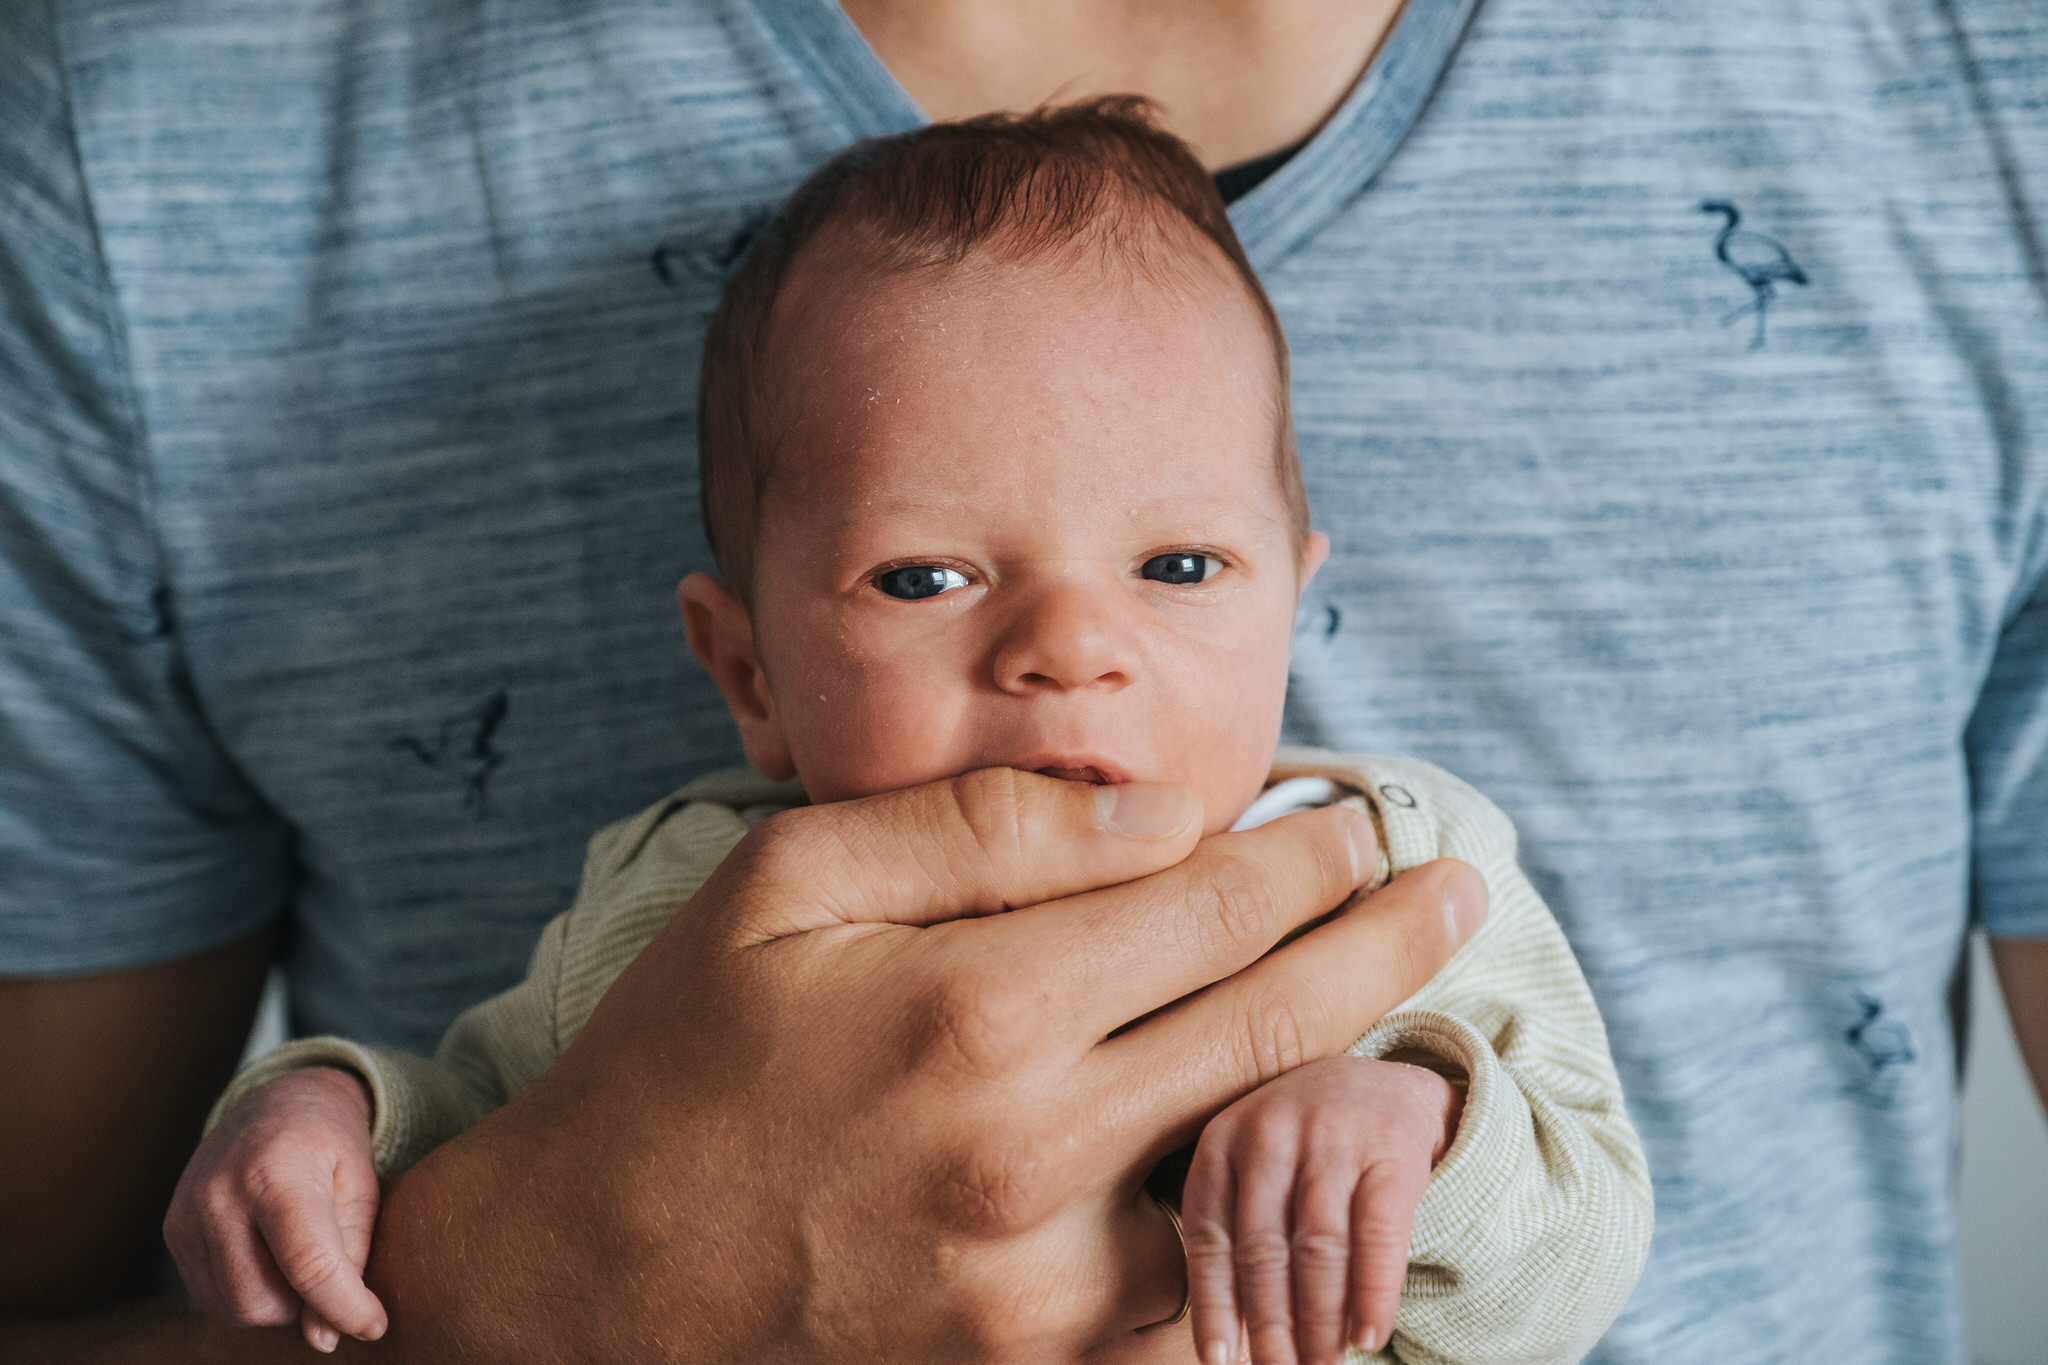 Mil newborn stijn willems photography heverlee